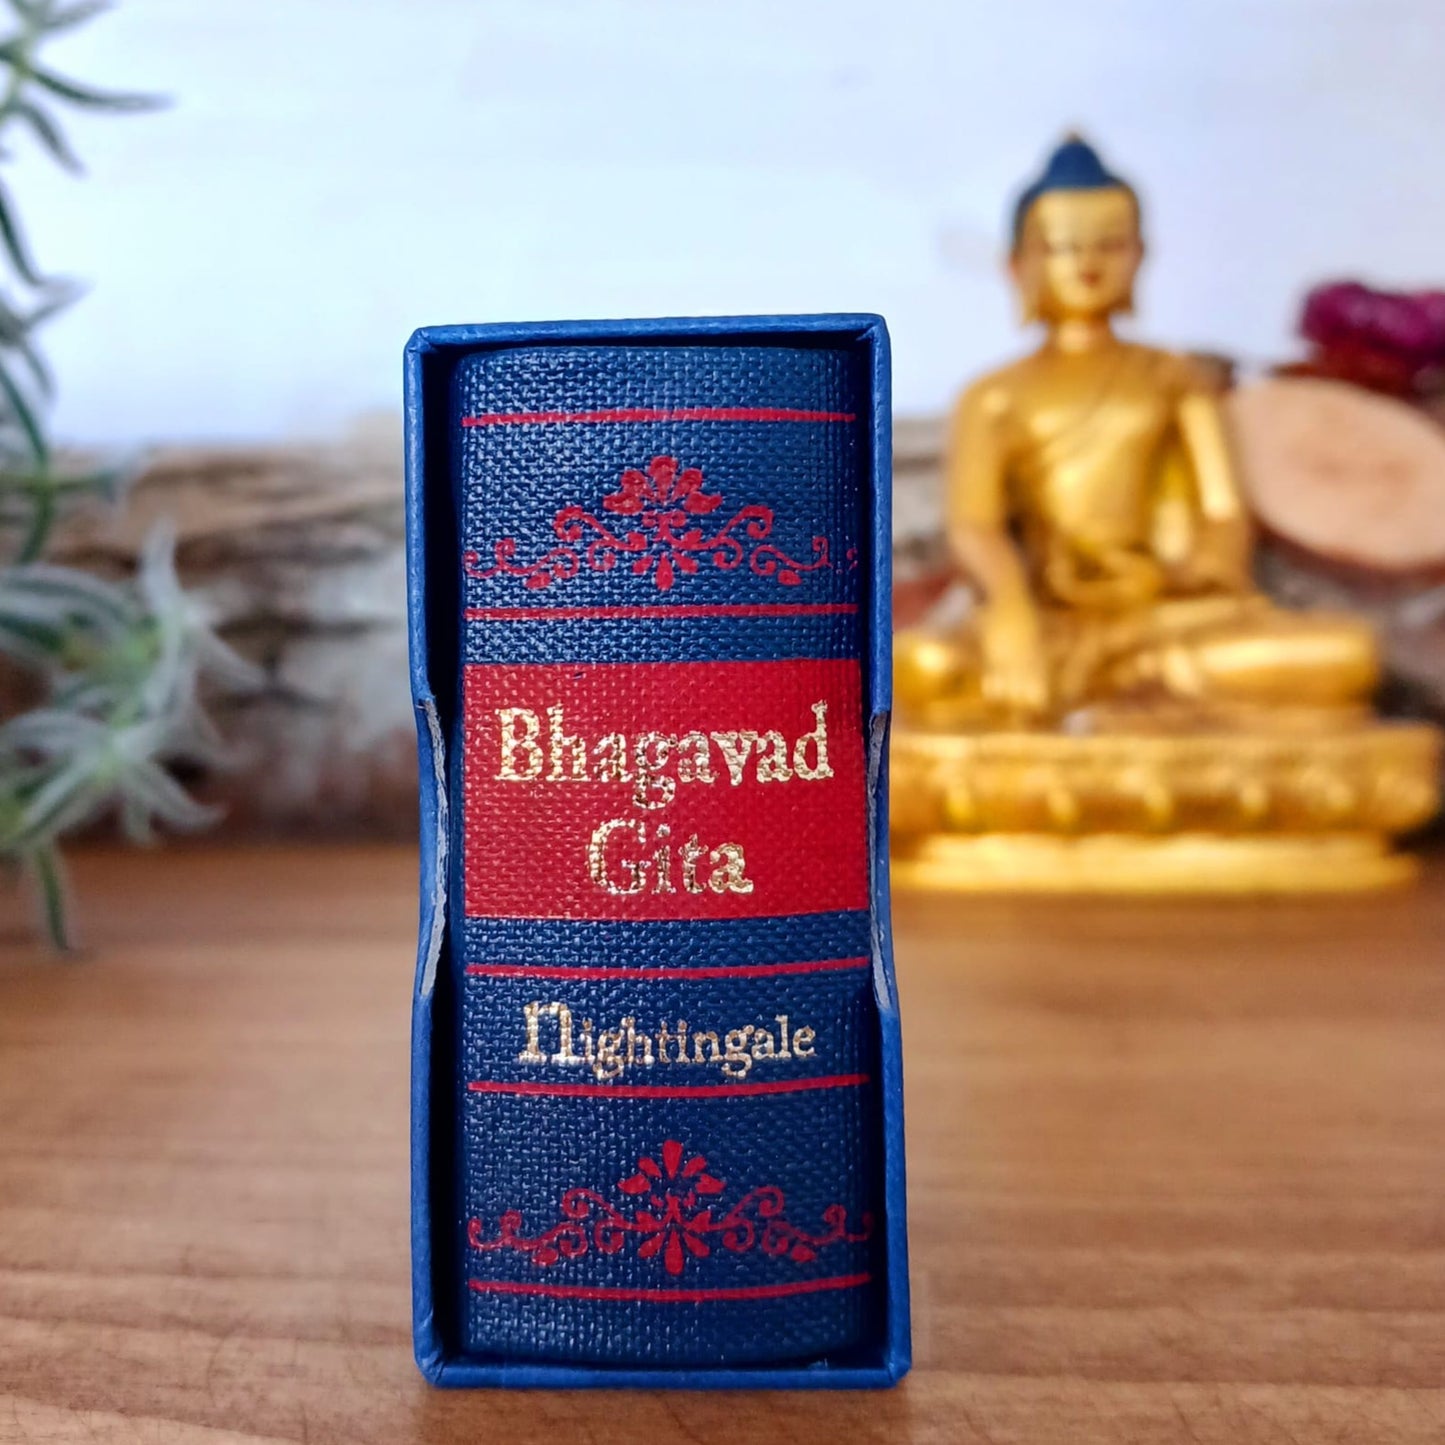 Bhagavad Gita - Small